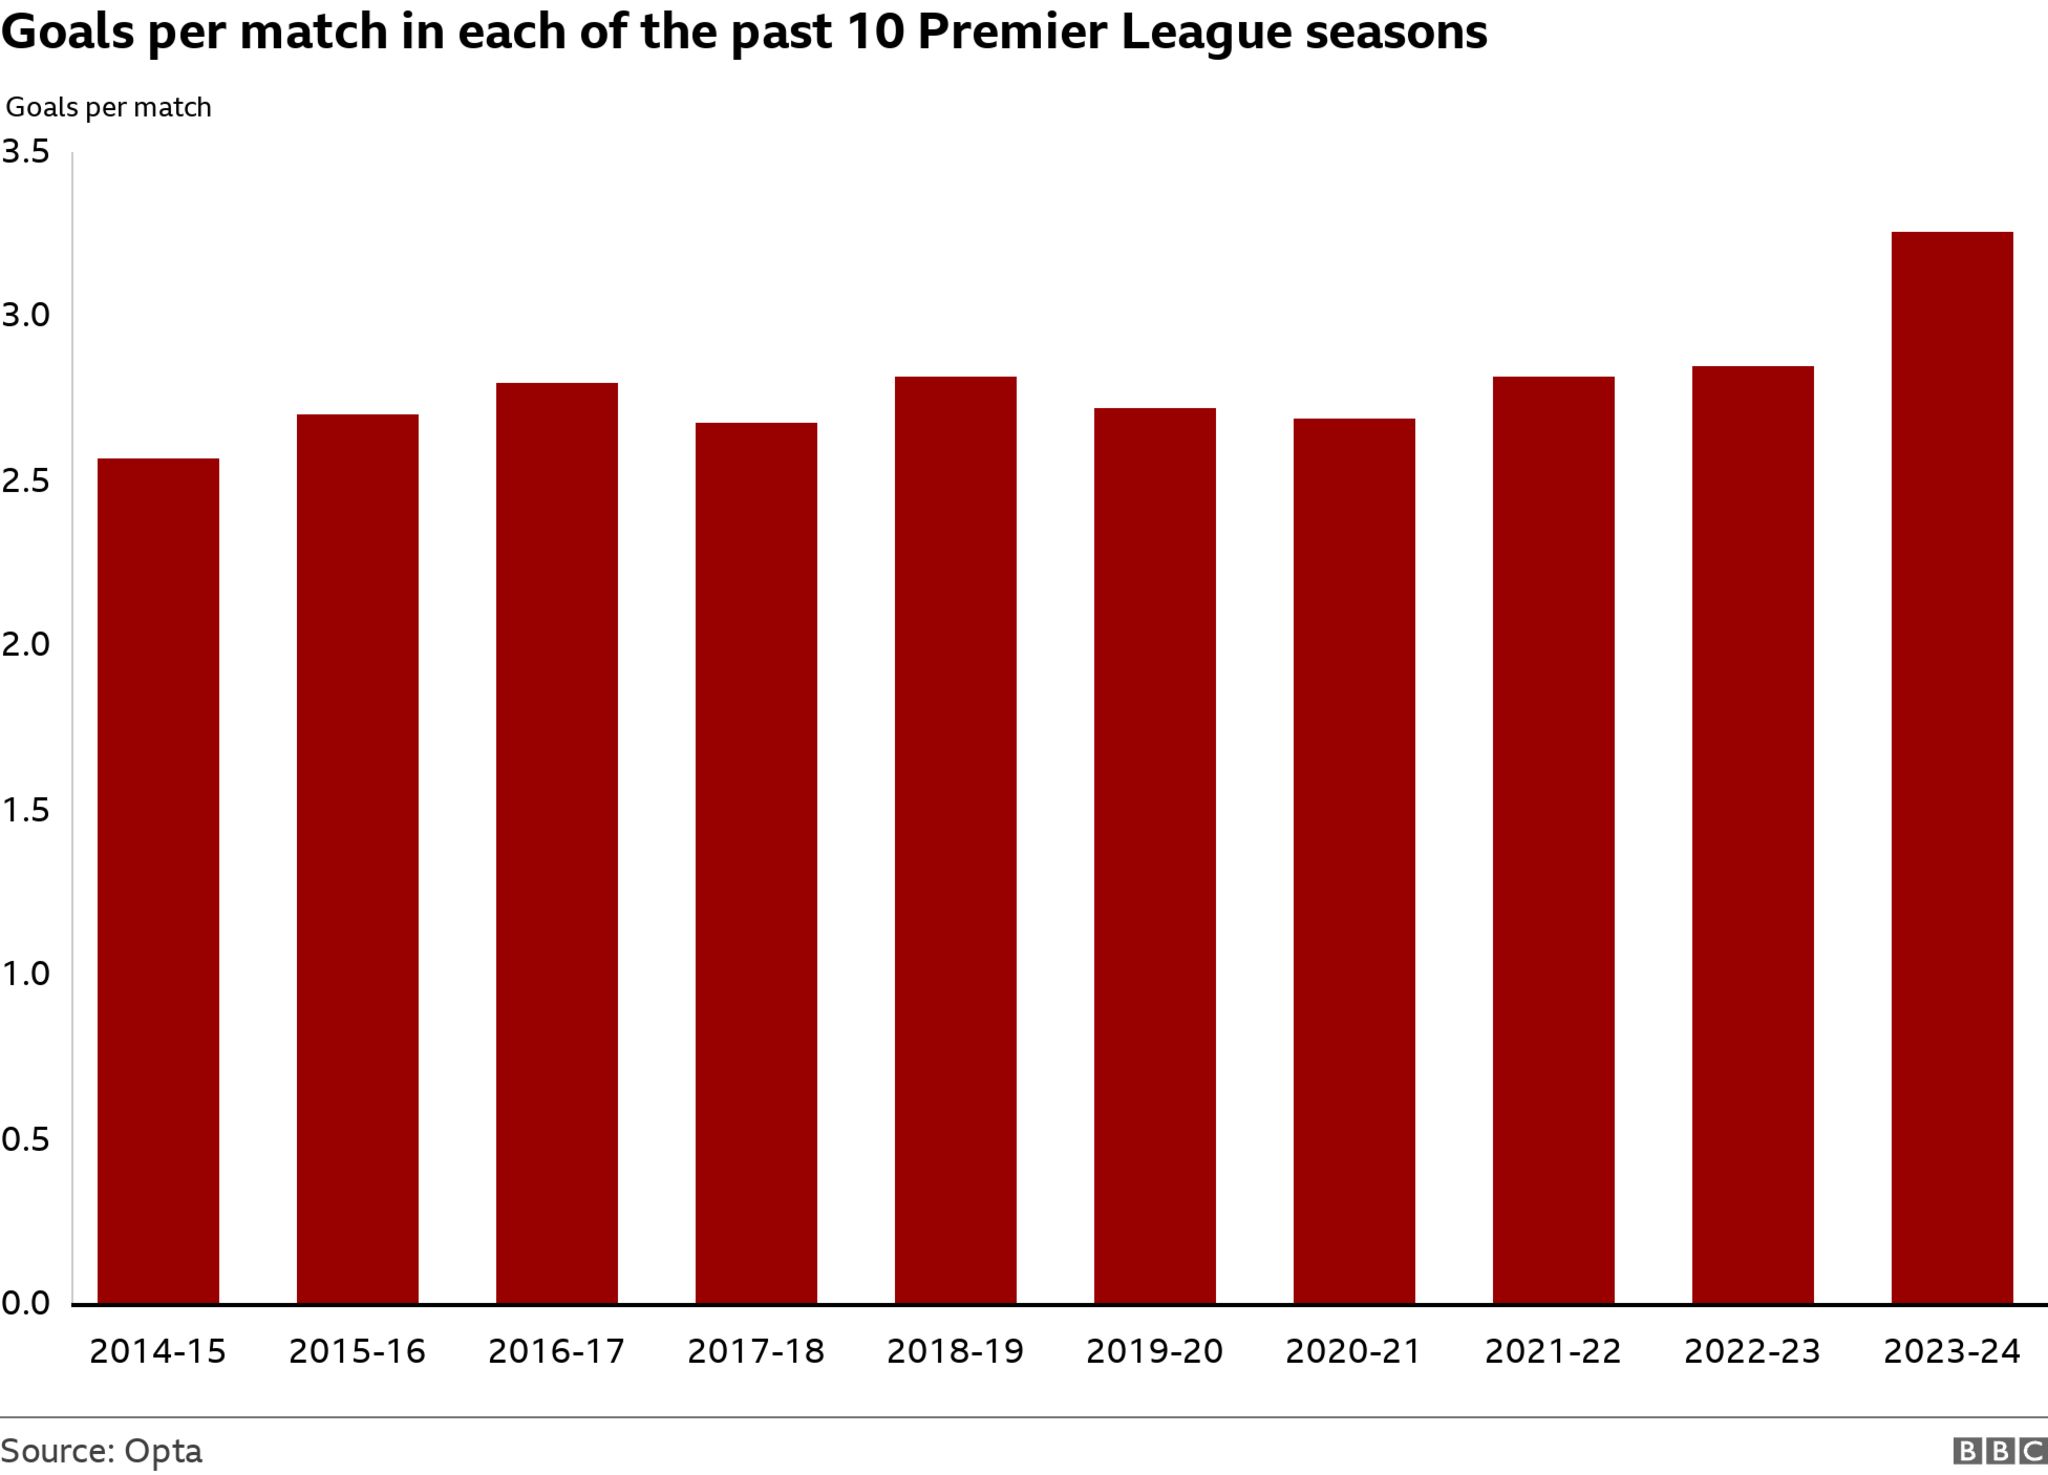 Goals per match in Premier League seasons over time